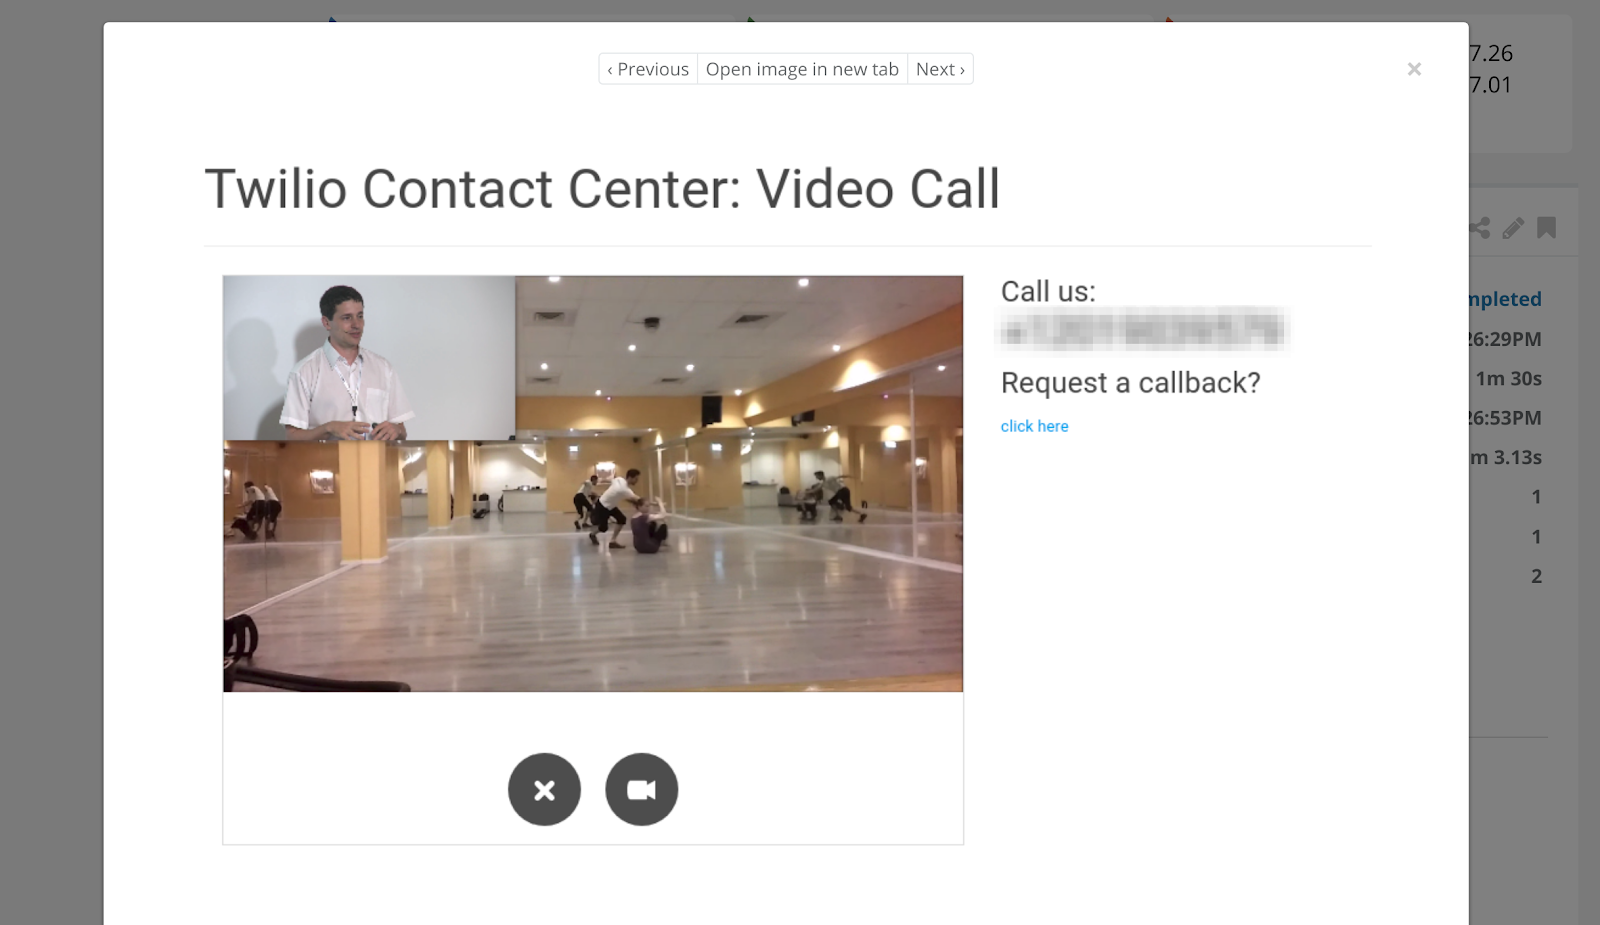 Example Video Call screen for a Twilio call center